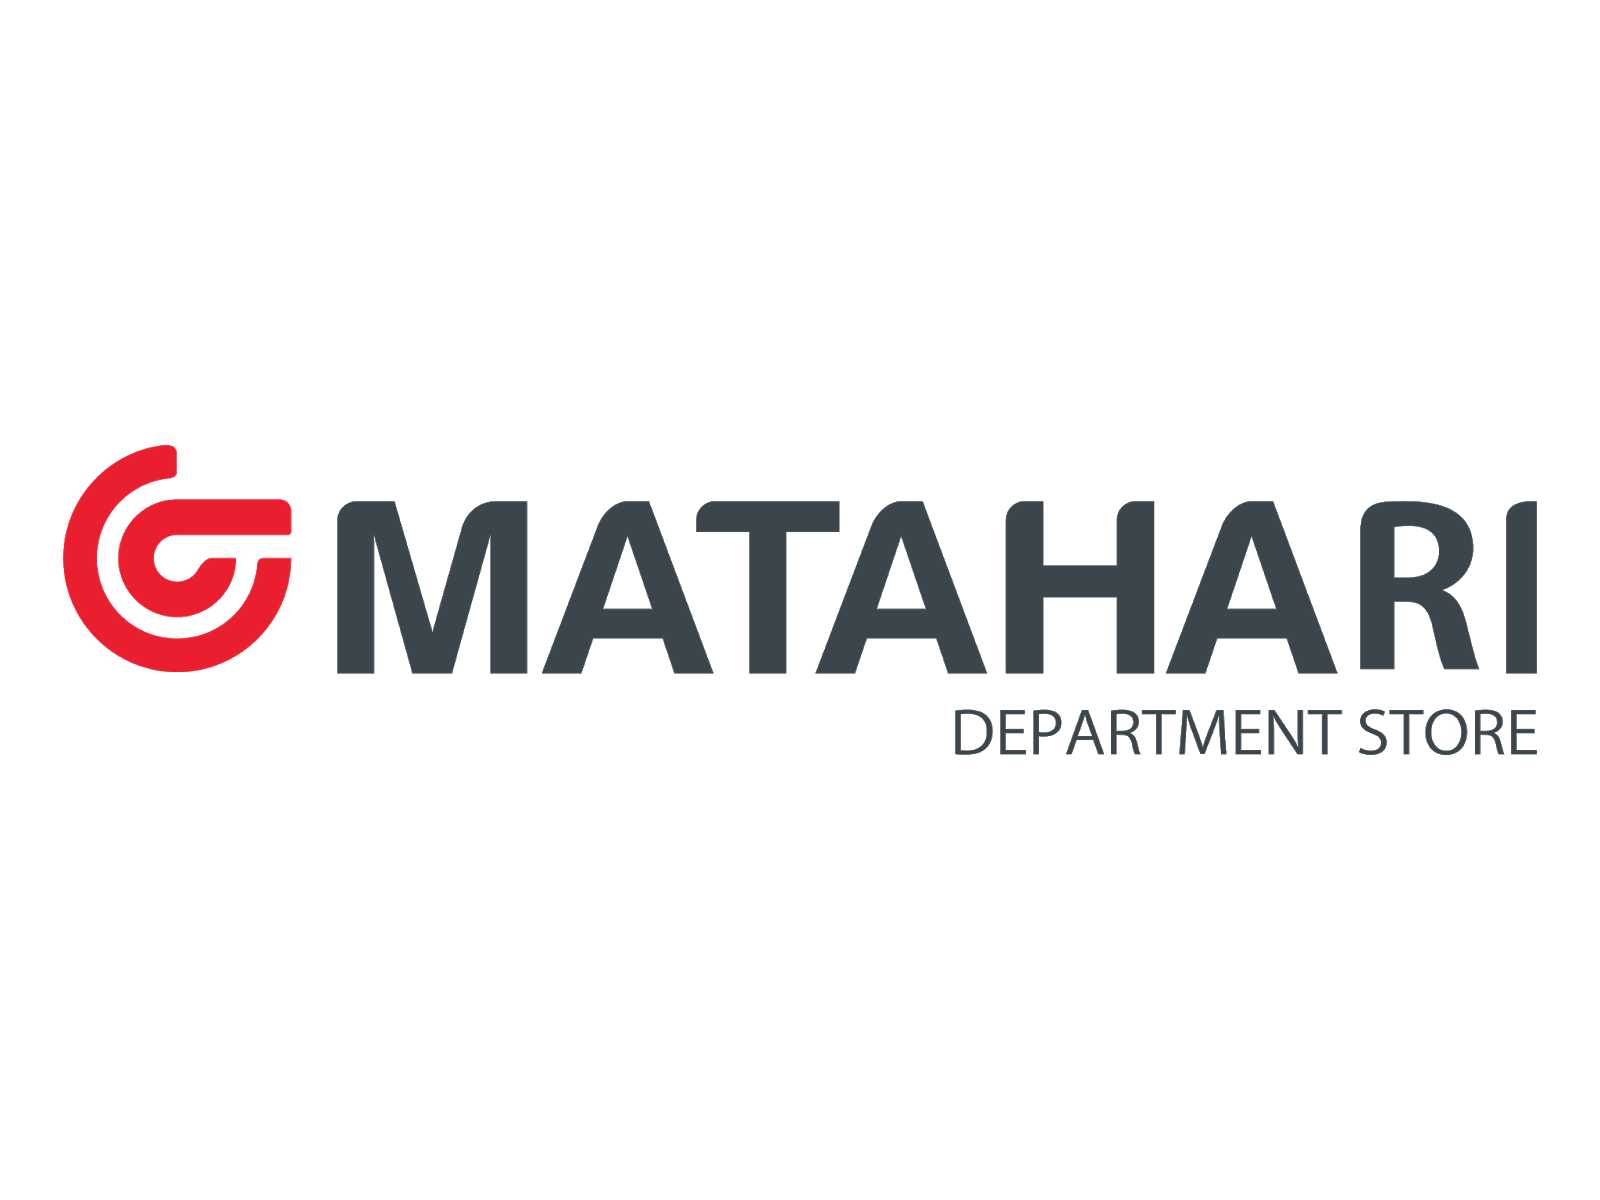  Logo  Matahari  Department Store Vector Cdr Png HD 